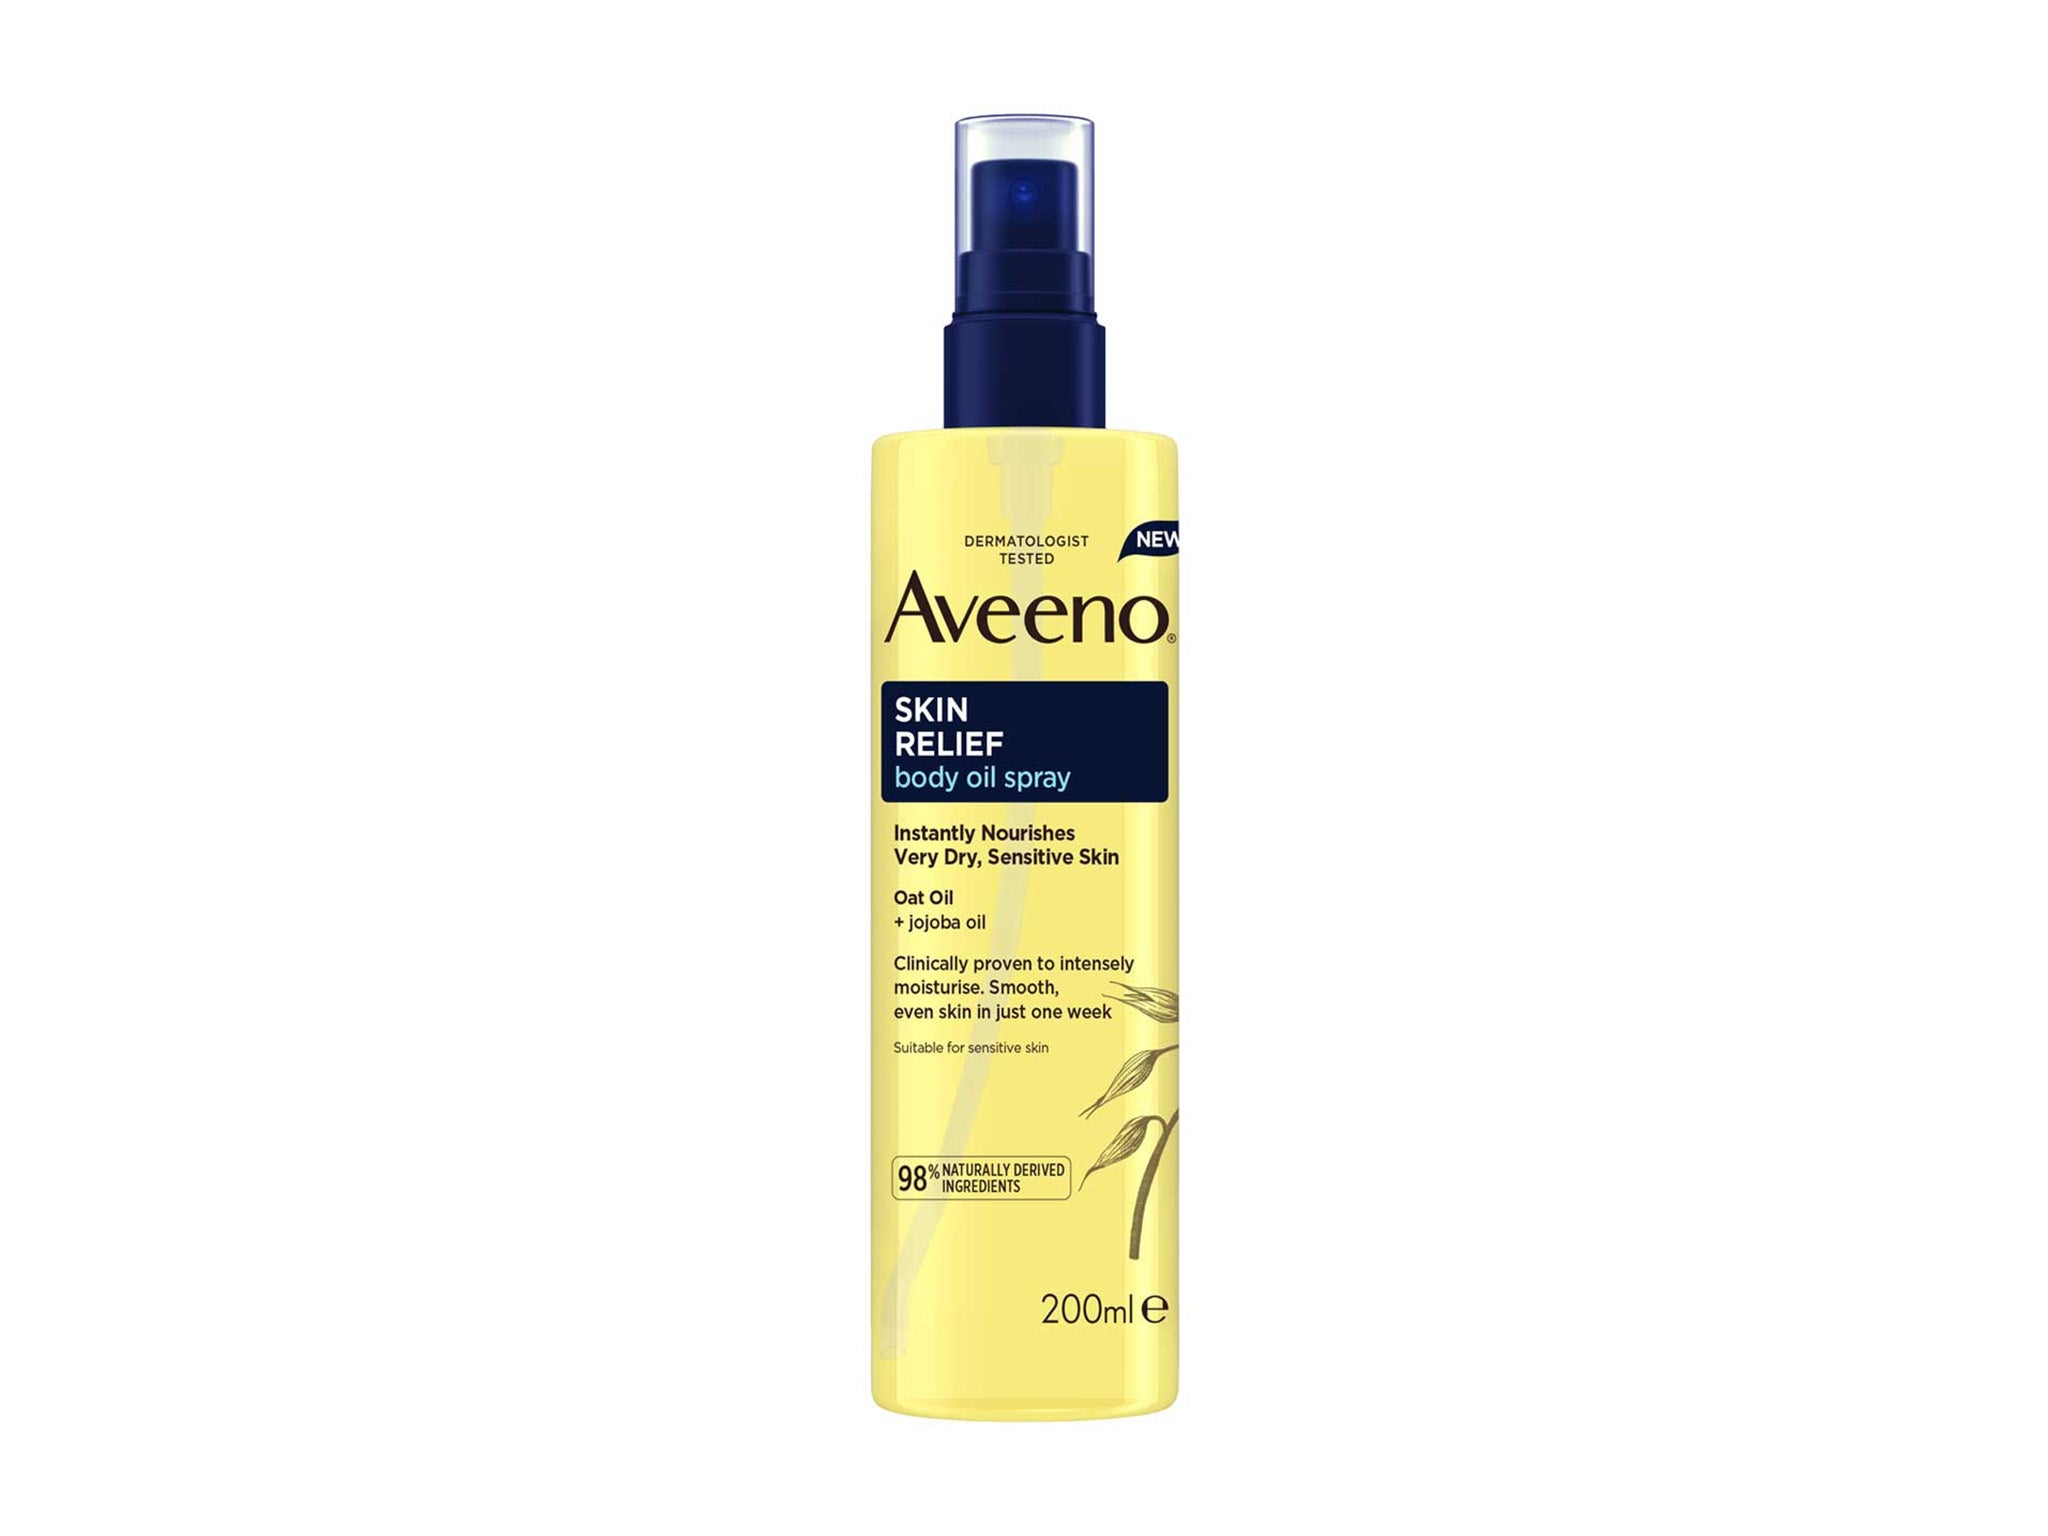 Aveeno skin relief body oil spray